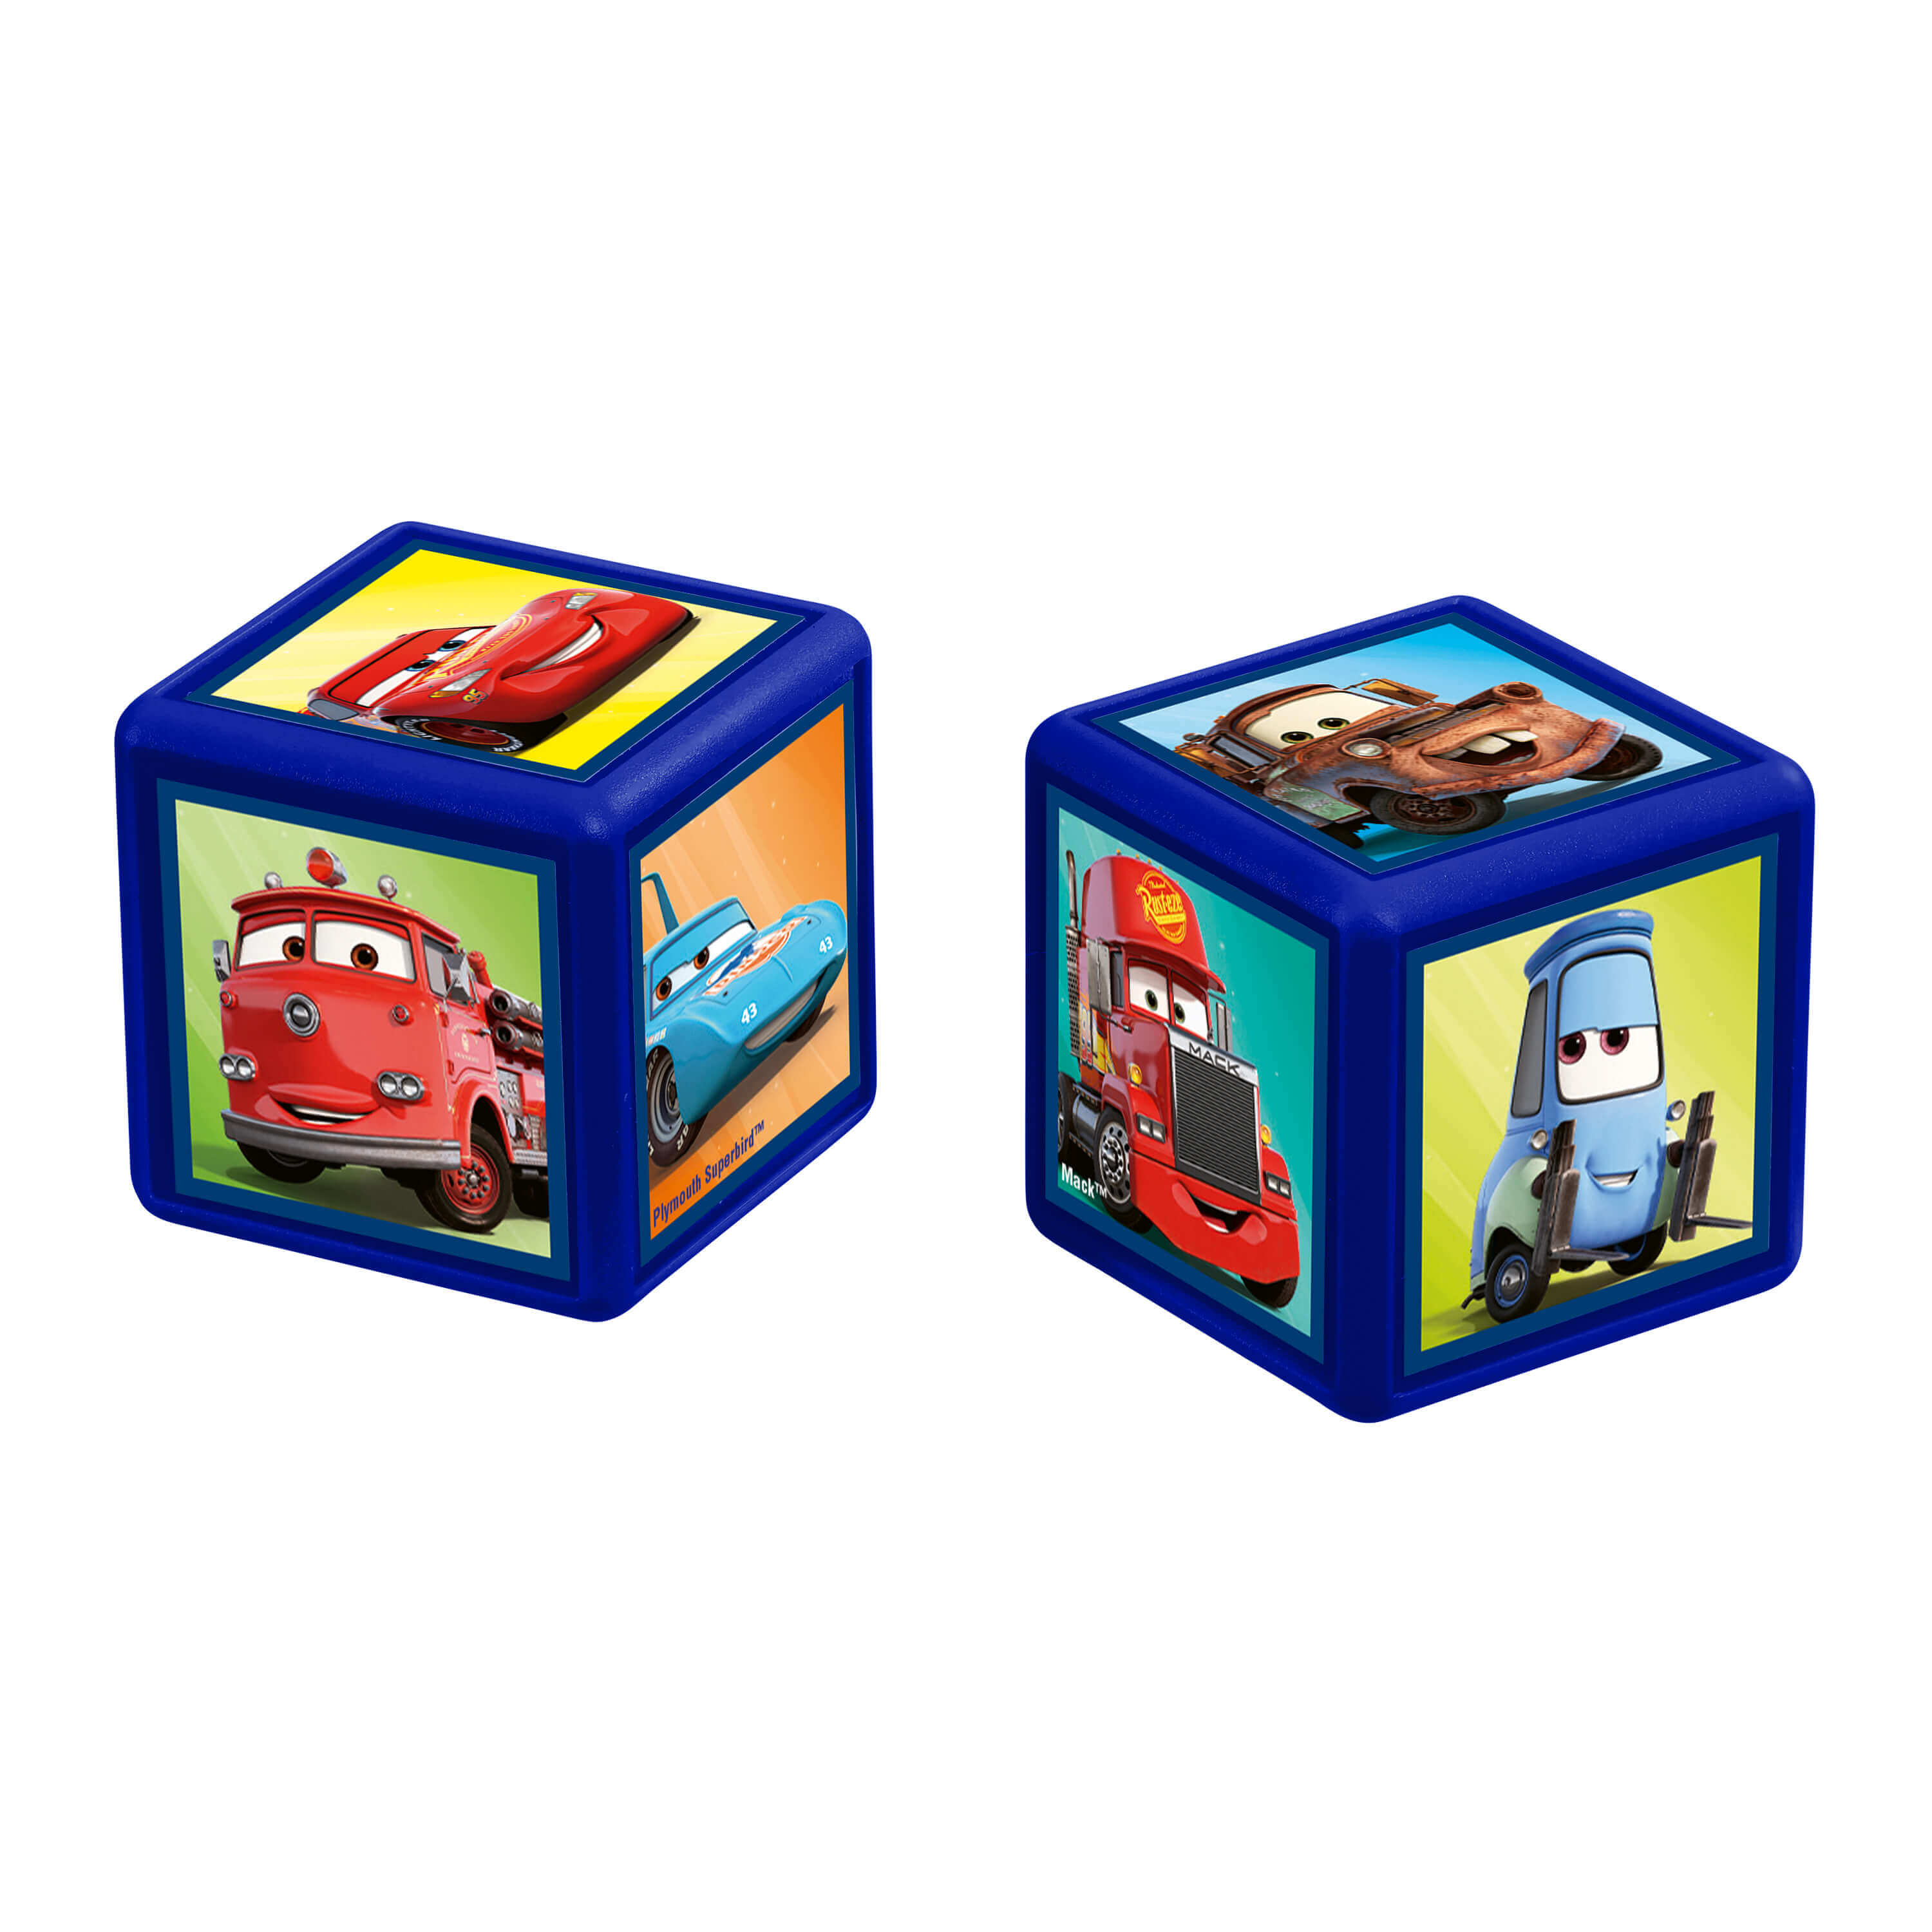 Pixar Cars Top Trumps Match - The Crazy Cube Game